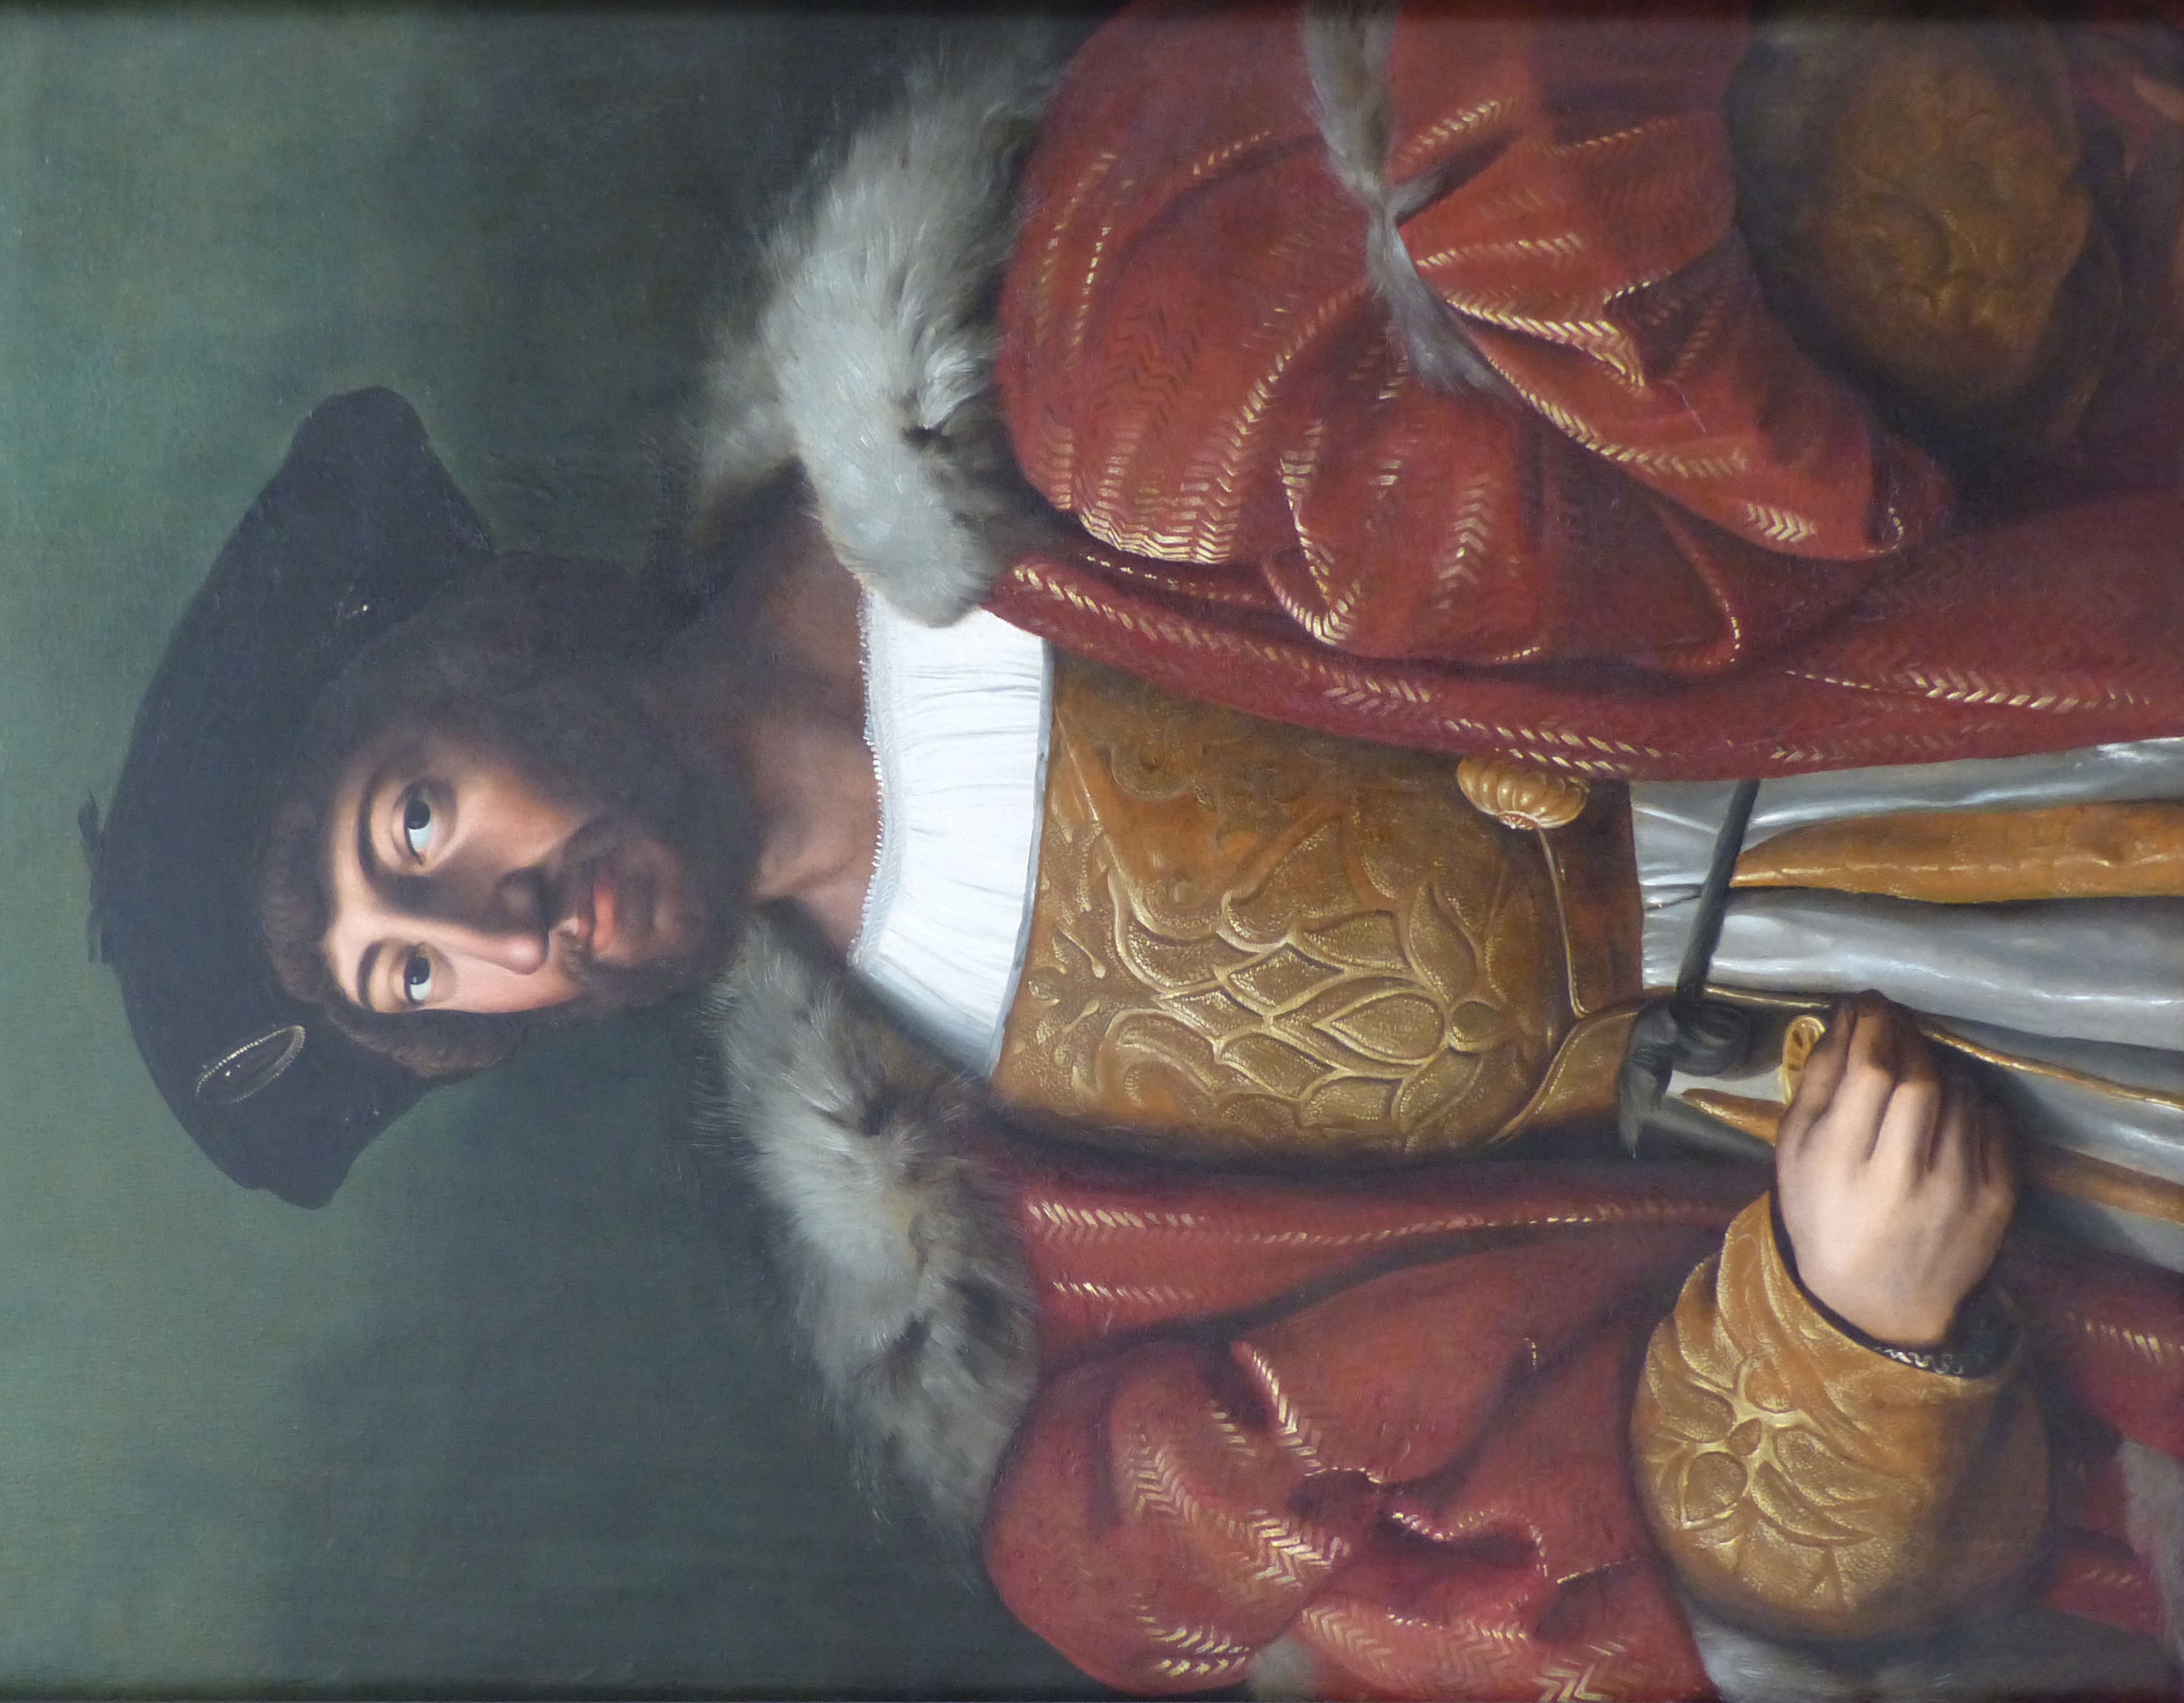 Lorenzo medici. Лоренцо Медичи портрет. Портрет Лоренцо Медичи великолепного. Лоренцо ди Пьеро де Медичи.